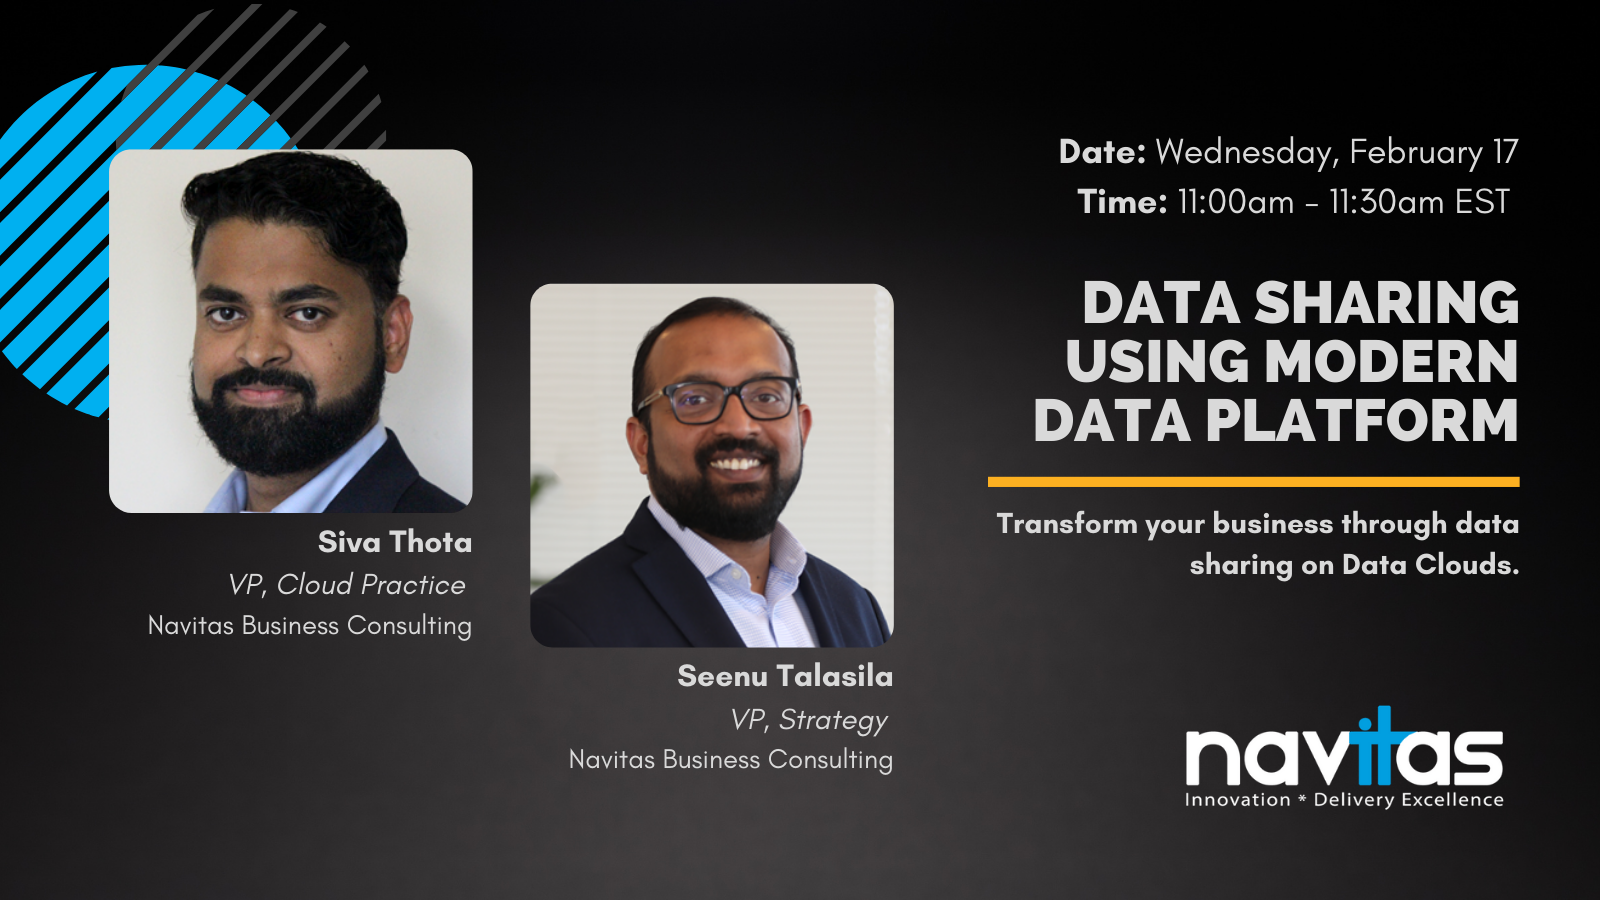 Save the Date! Navitas Presents: Data Sharing Using Modern Data Platform